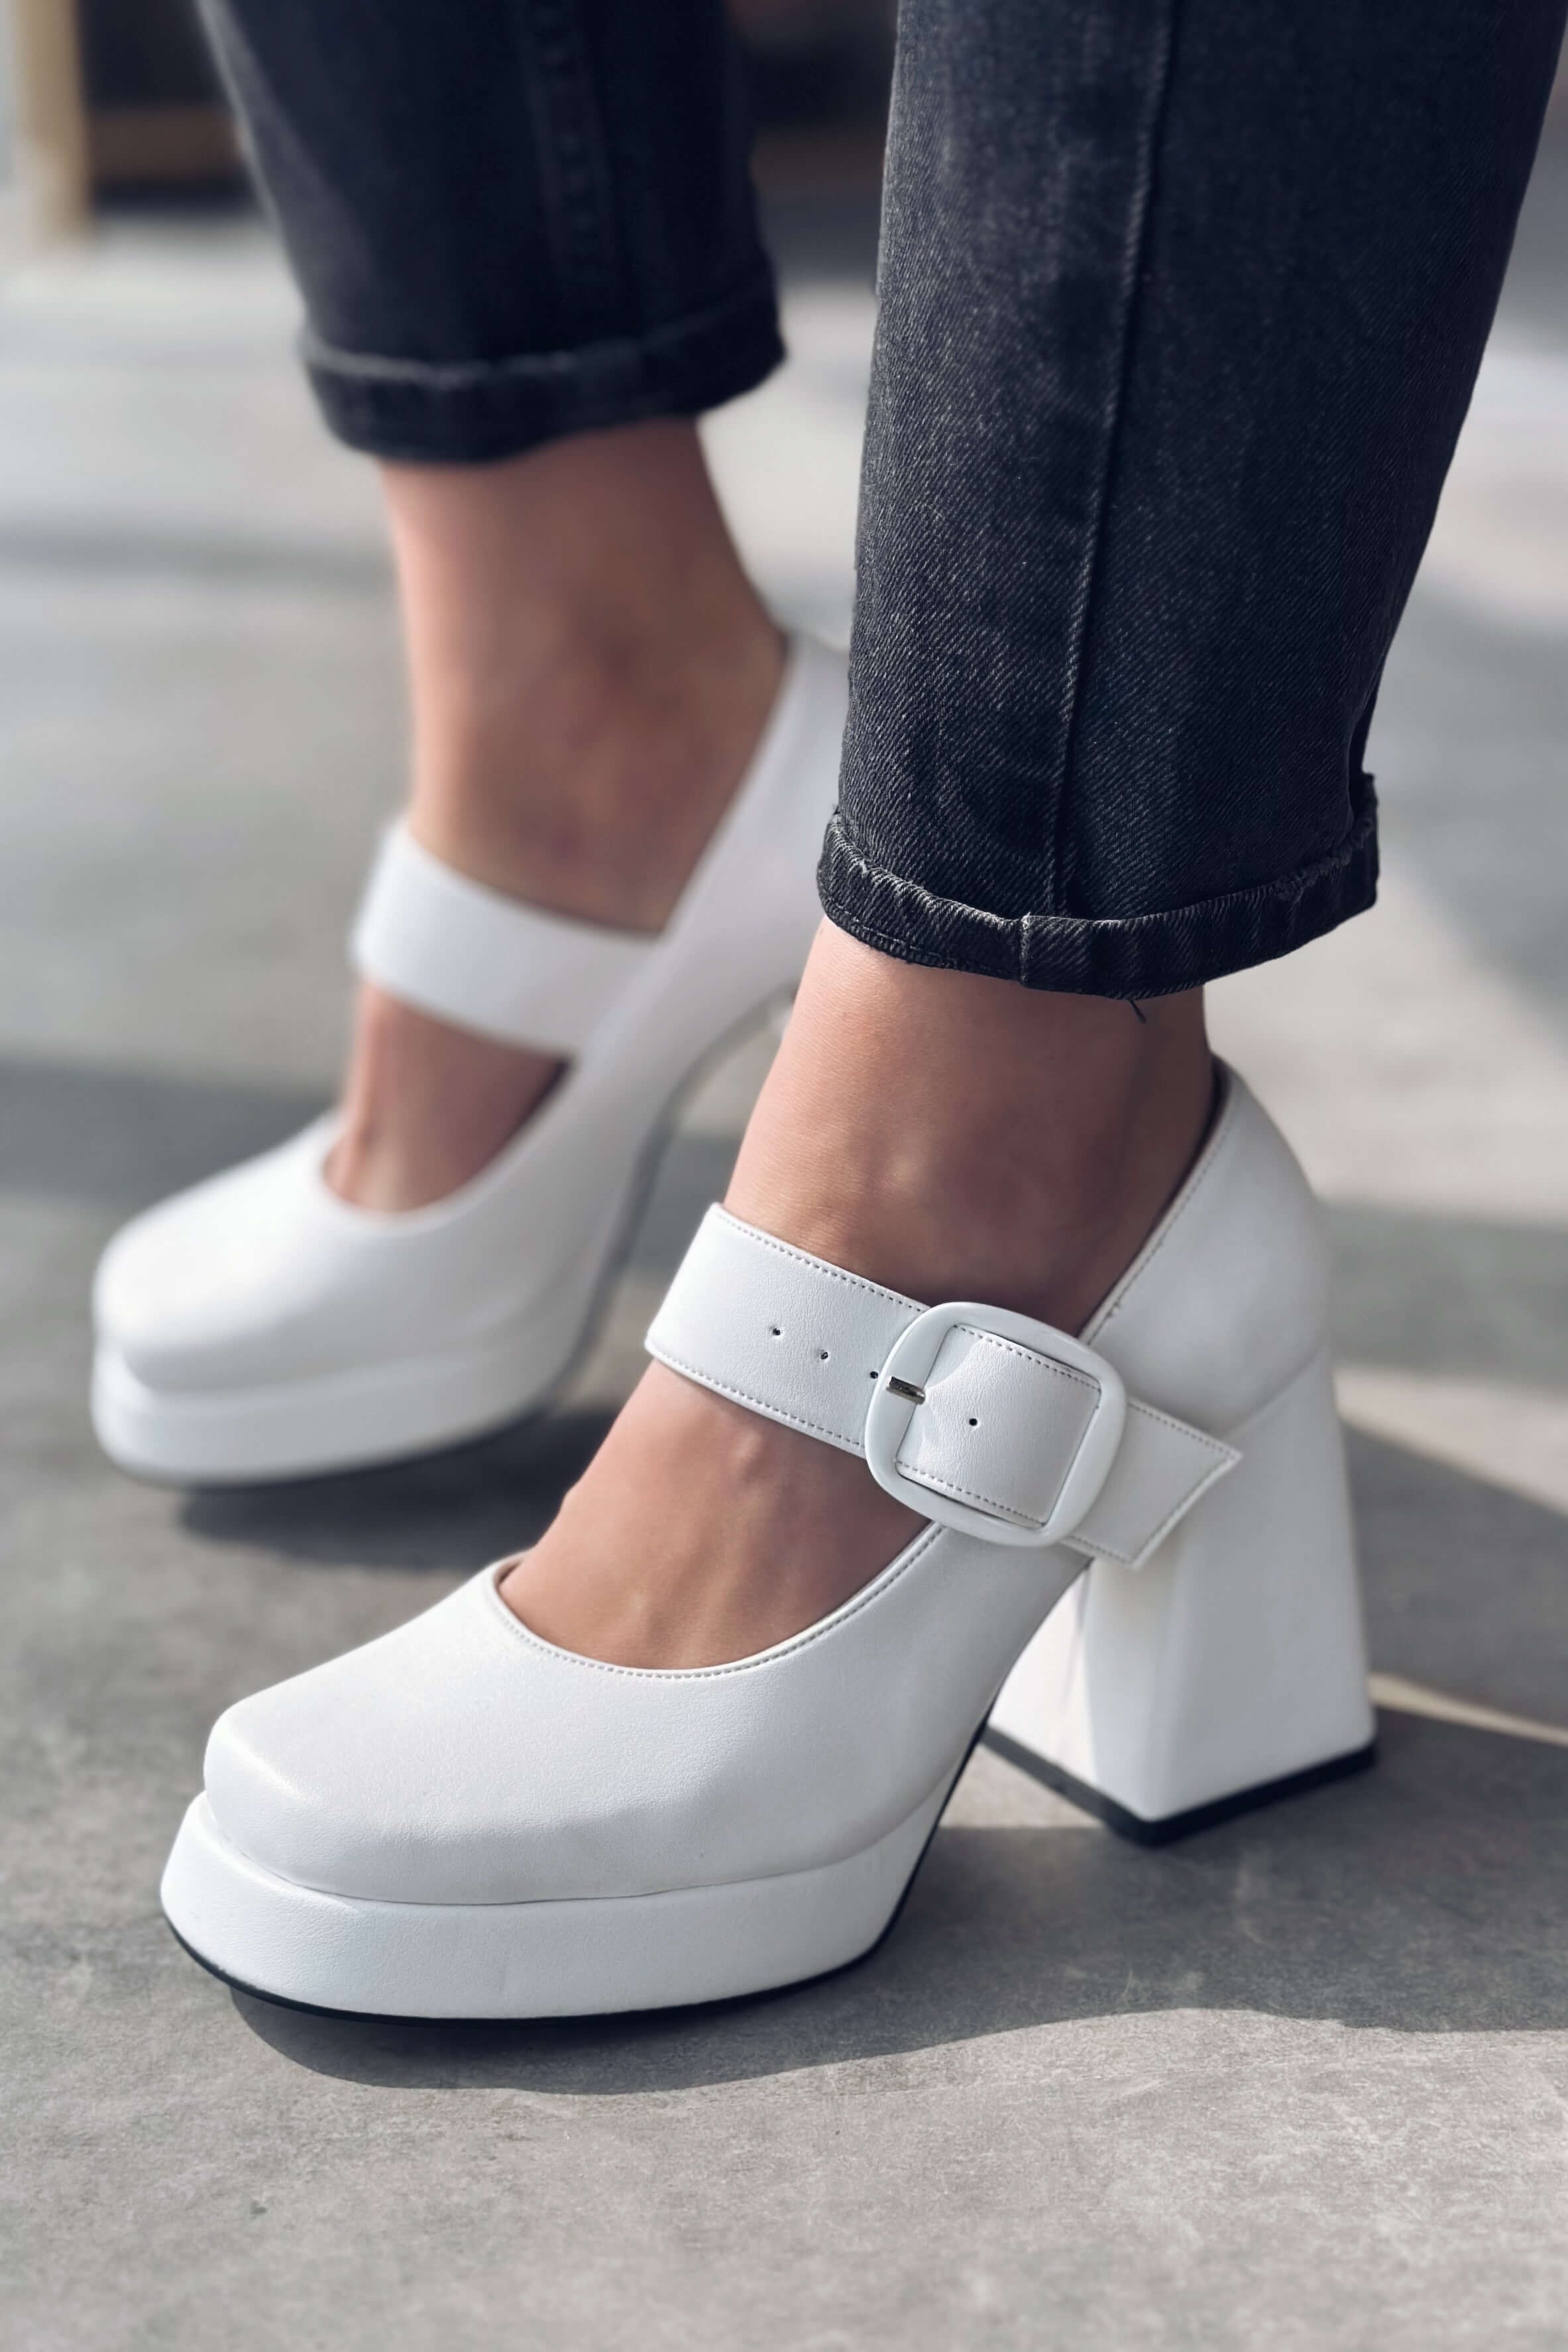 Alpons Mat Deri Kadın Platform Topuklu Ayakkabı Beyaz